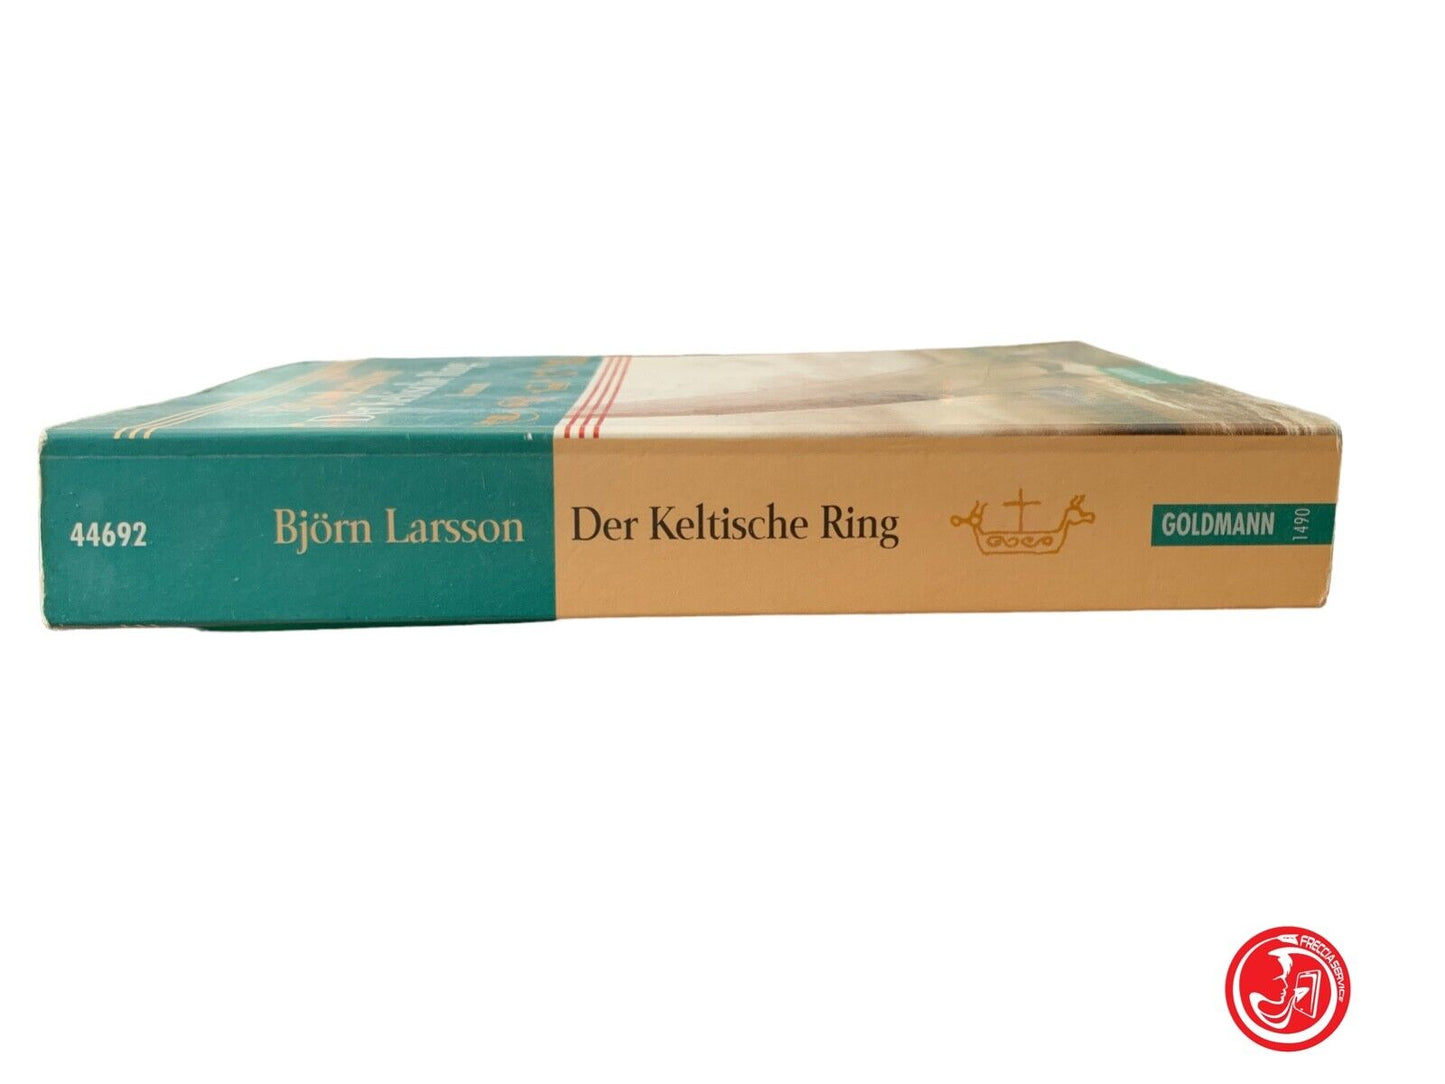 Der Celiache Ring - Björn Larsson - Goldmann